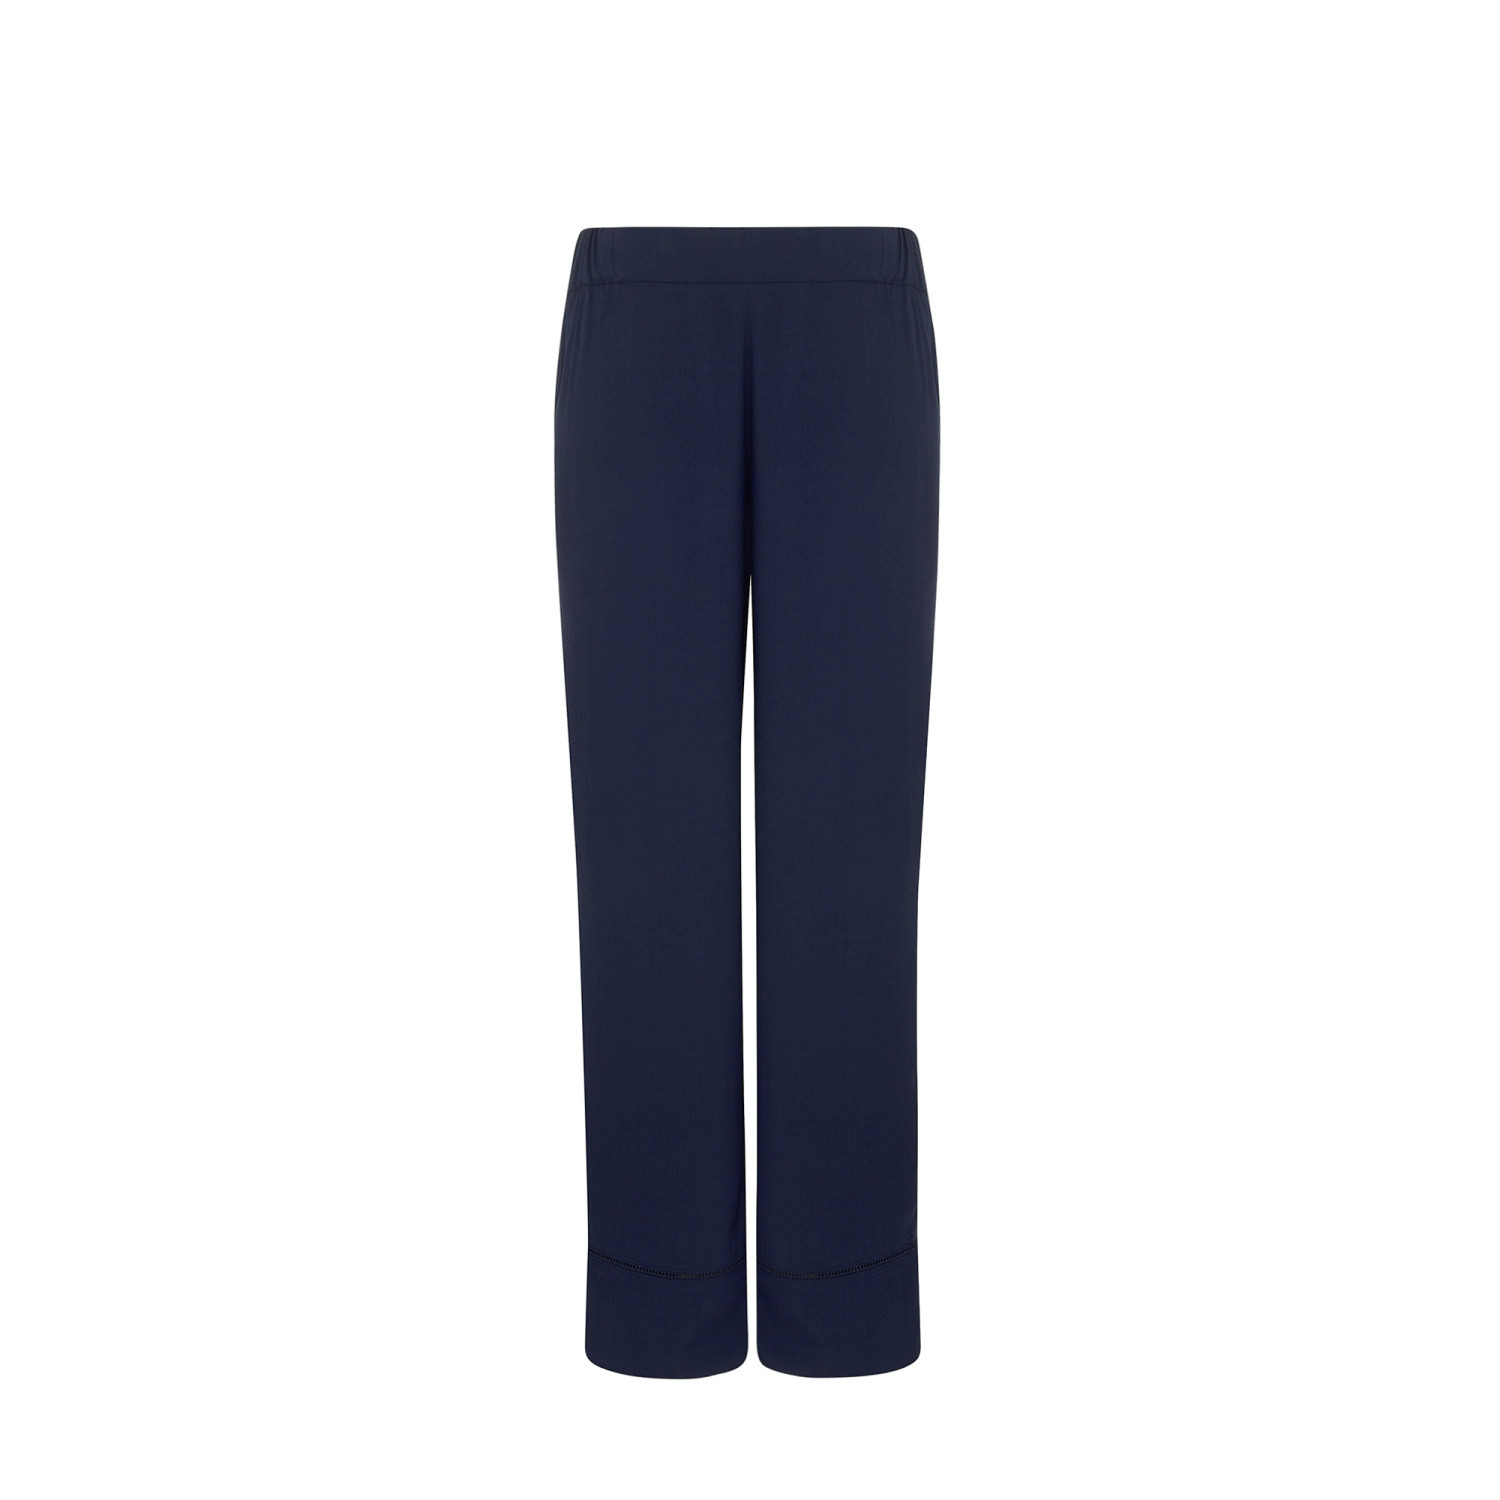 Pantalone pigiama lungo, Blu, large image number 0